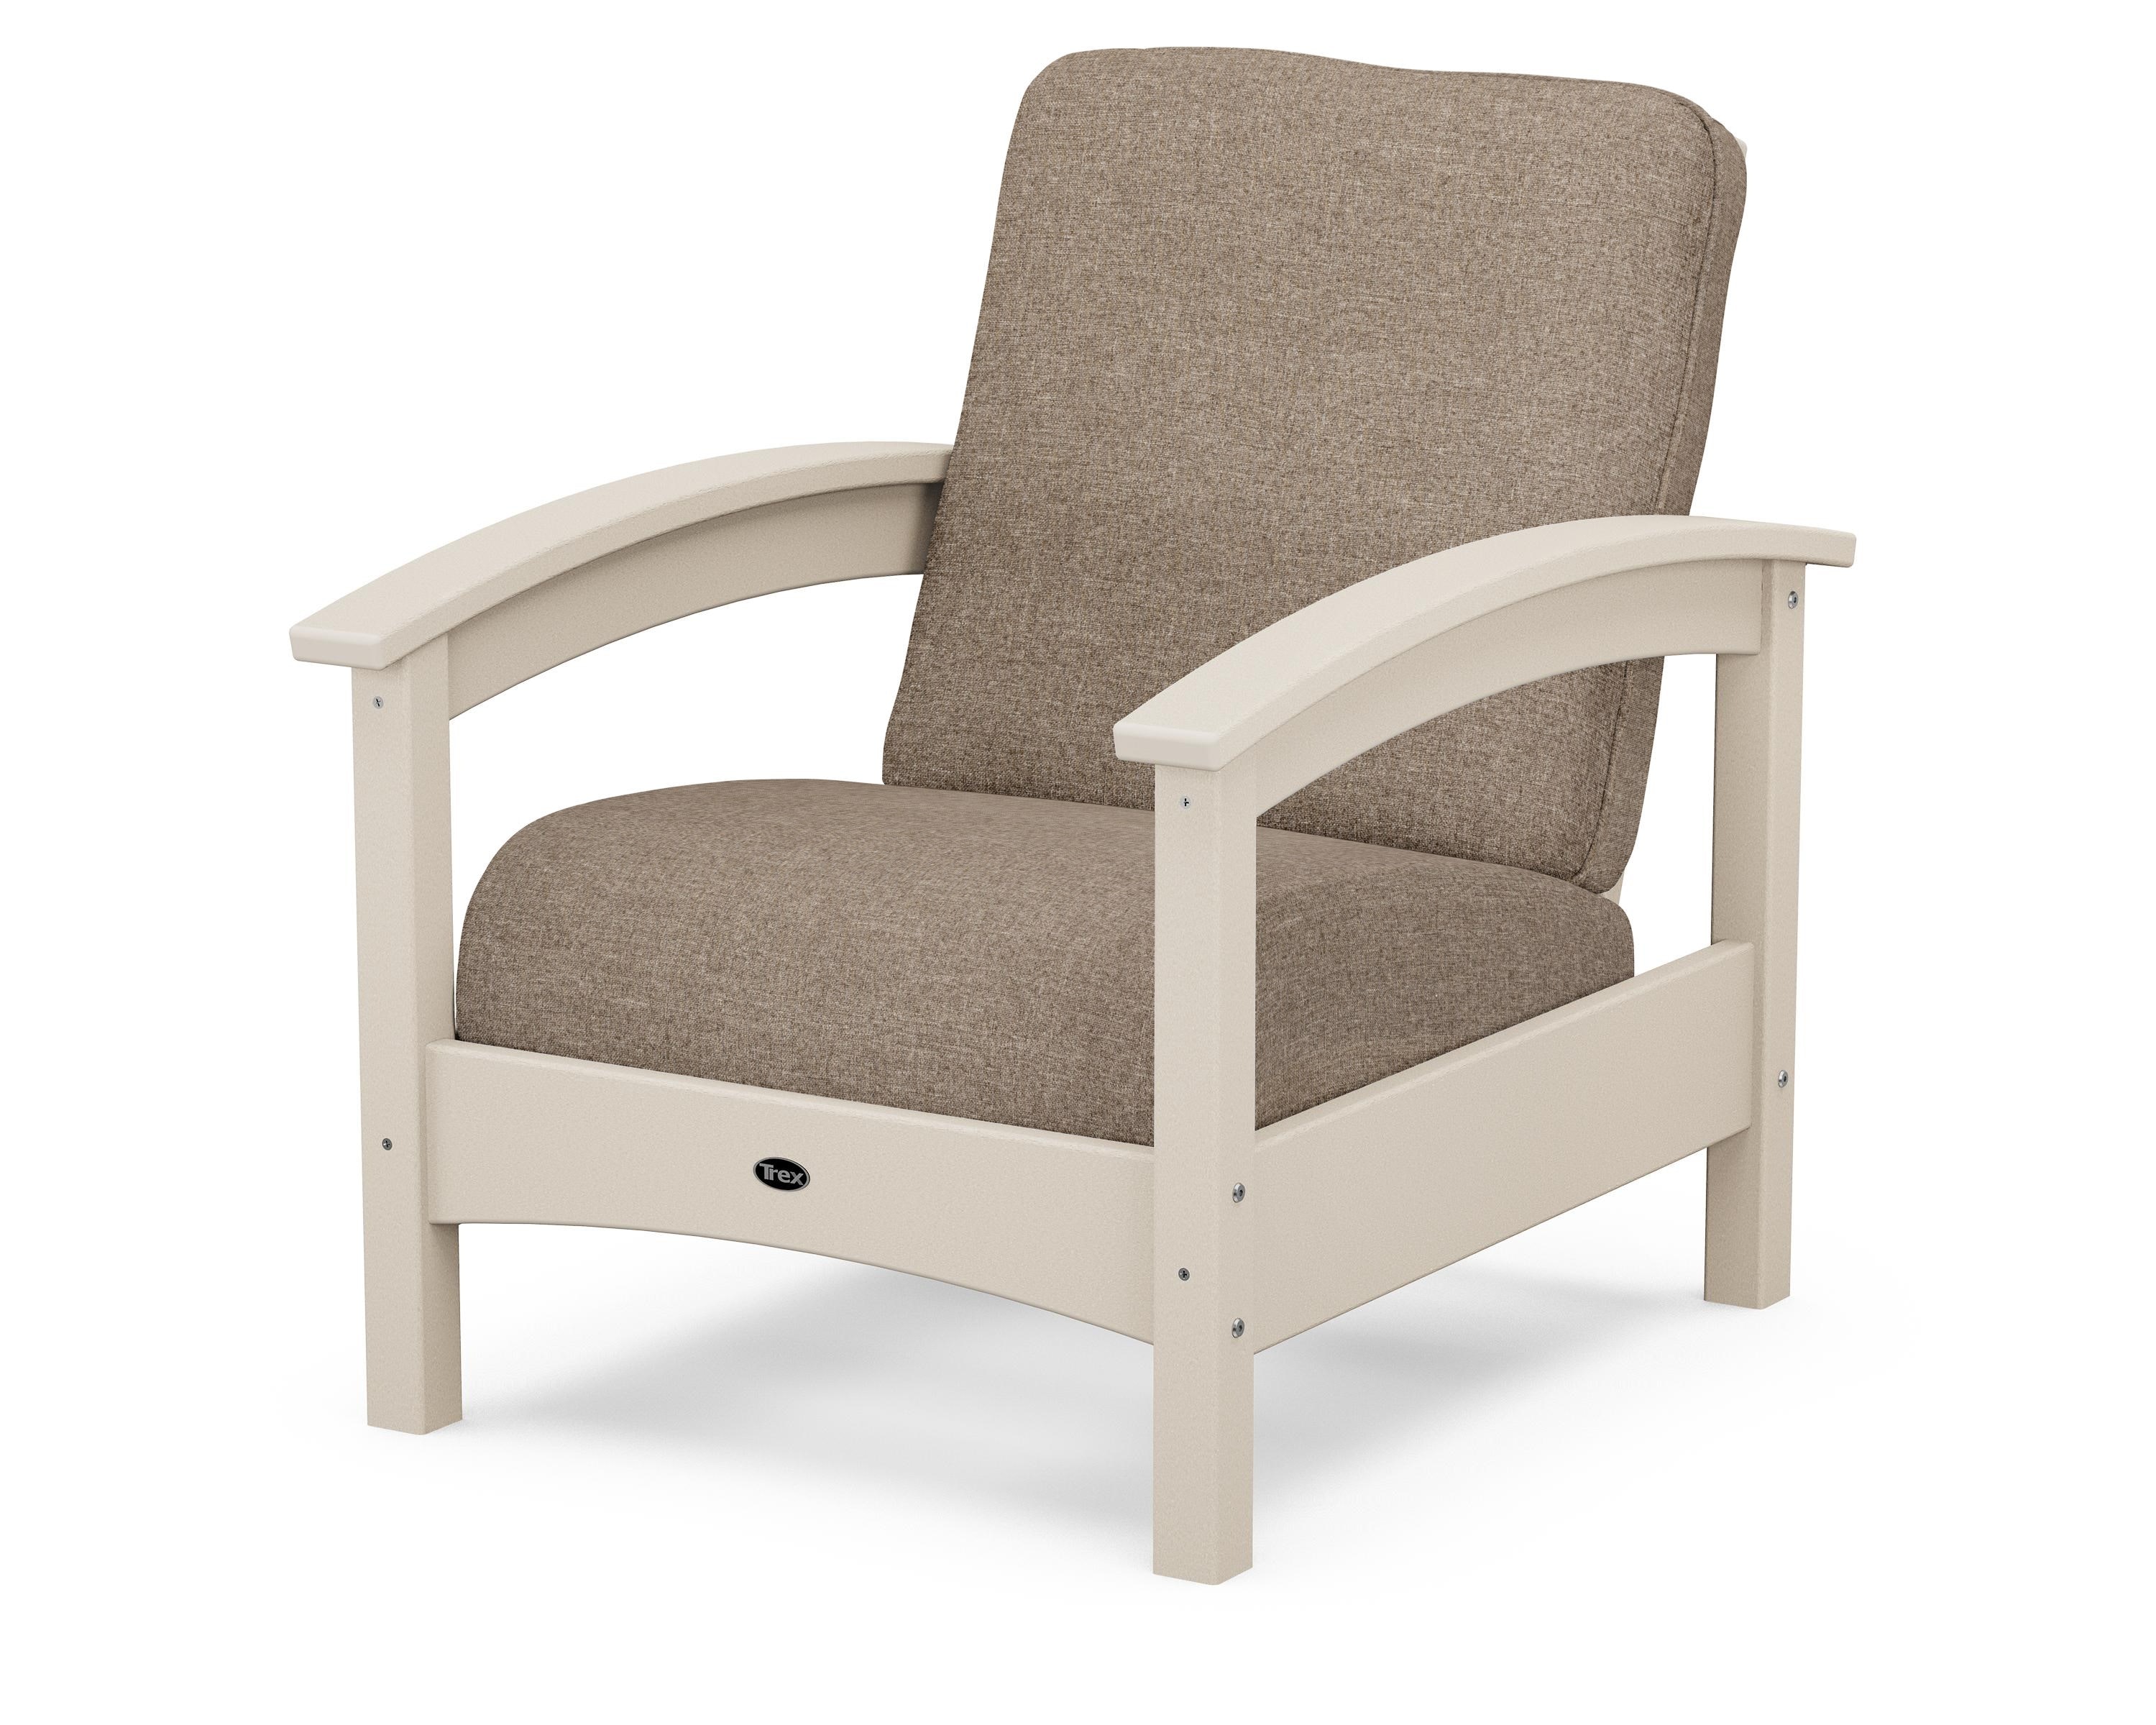 Trex Outdoor Furniture Rockport Club Chair